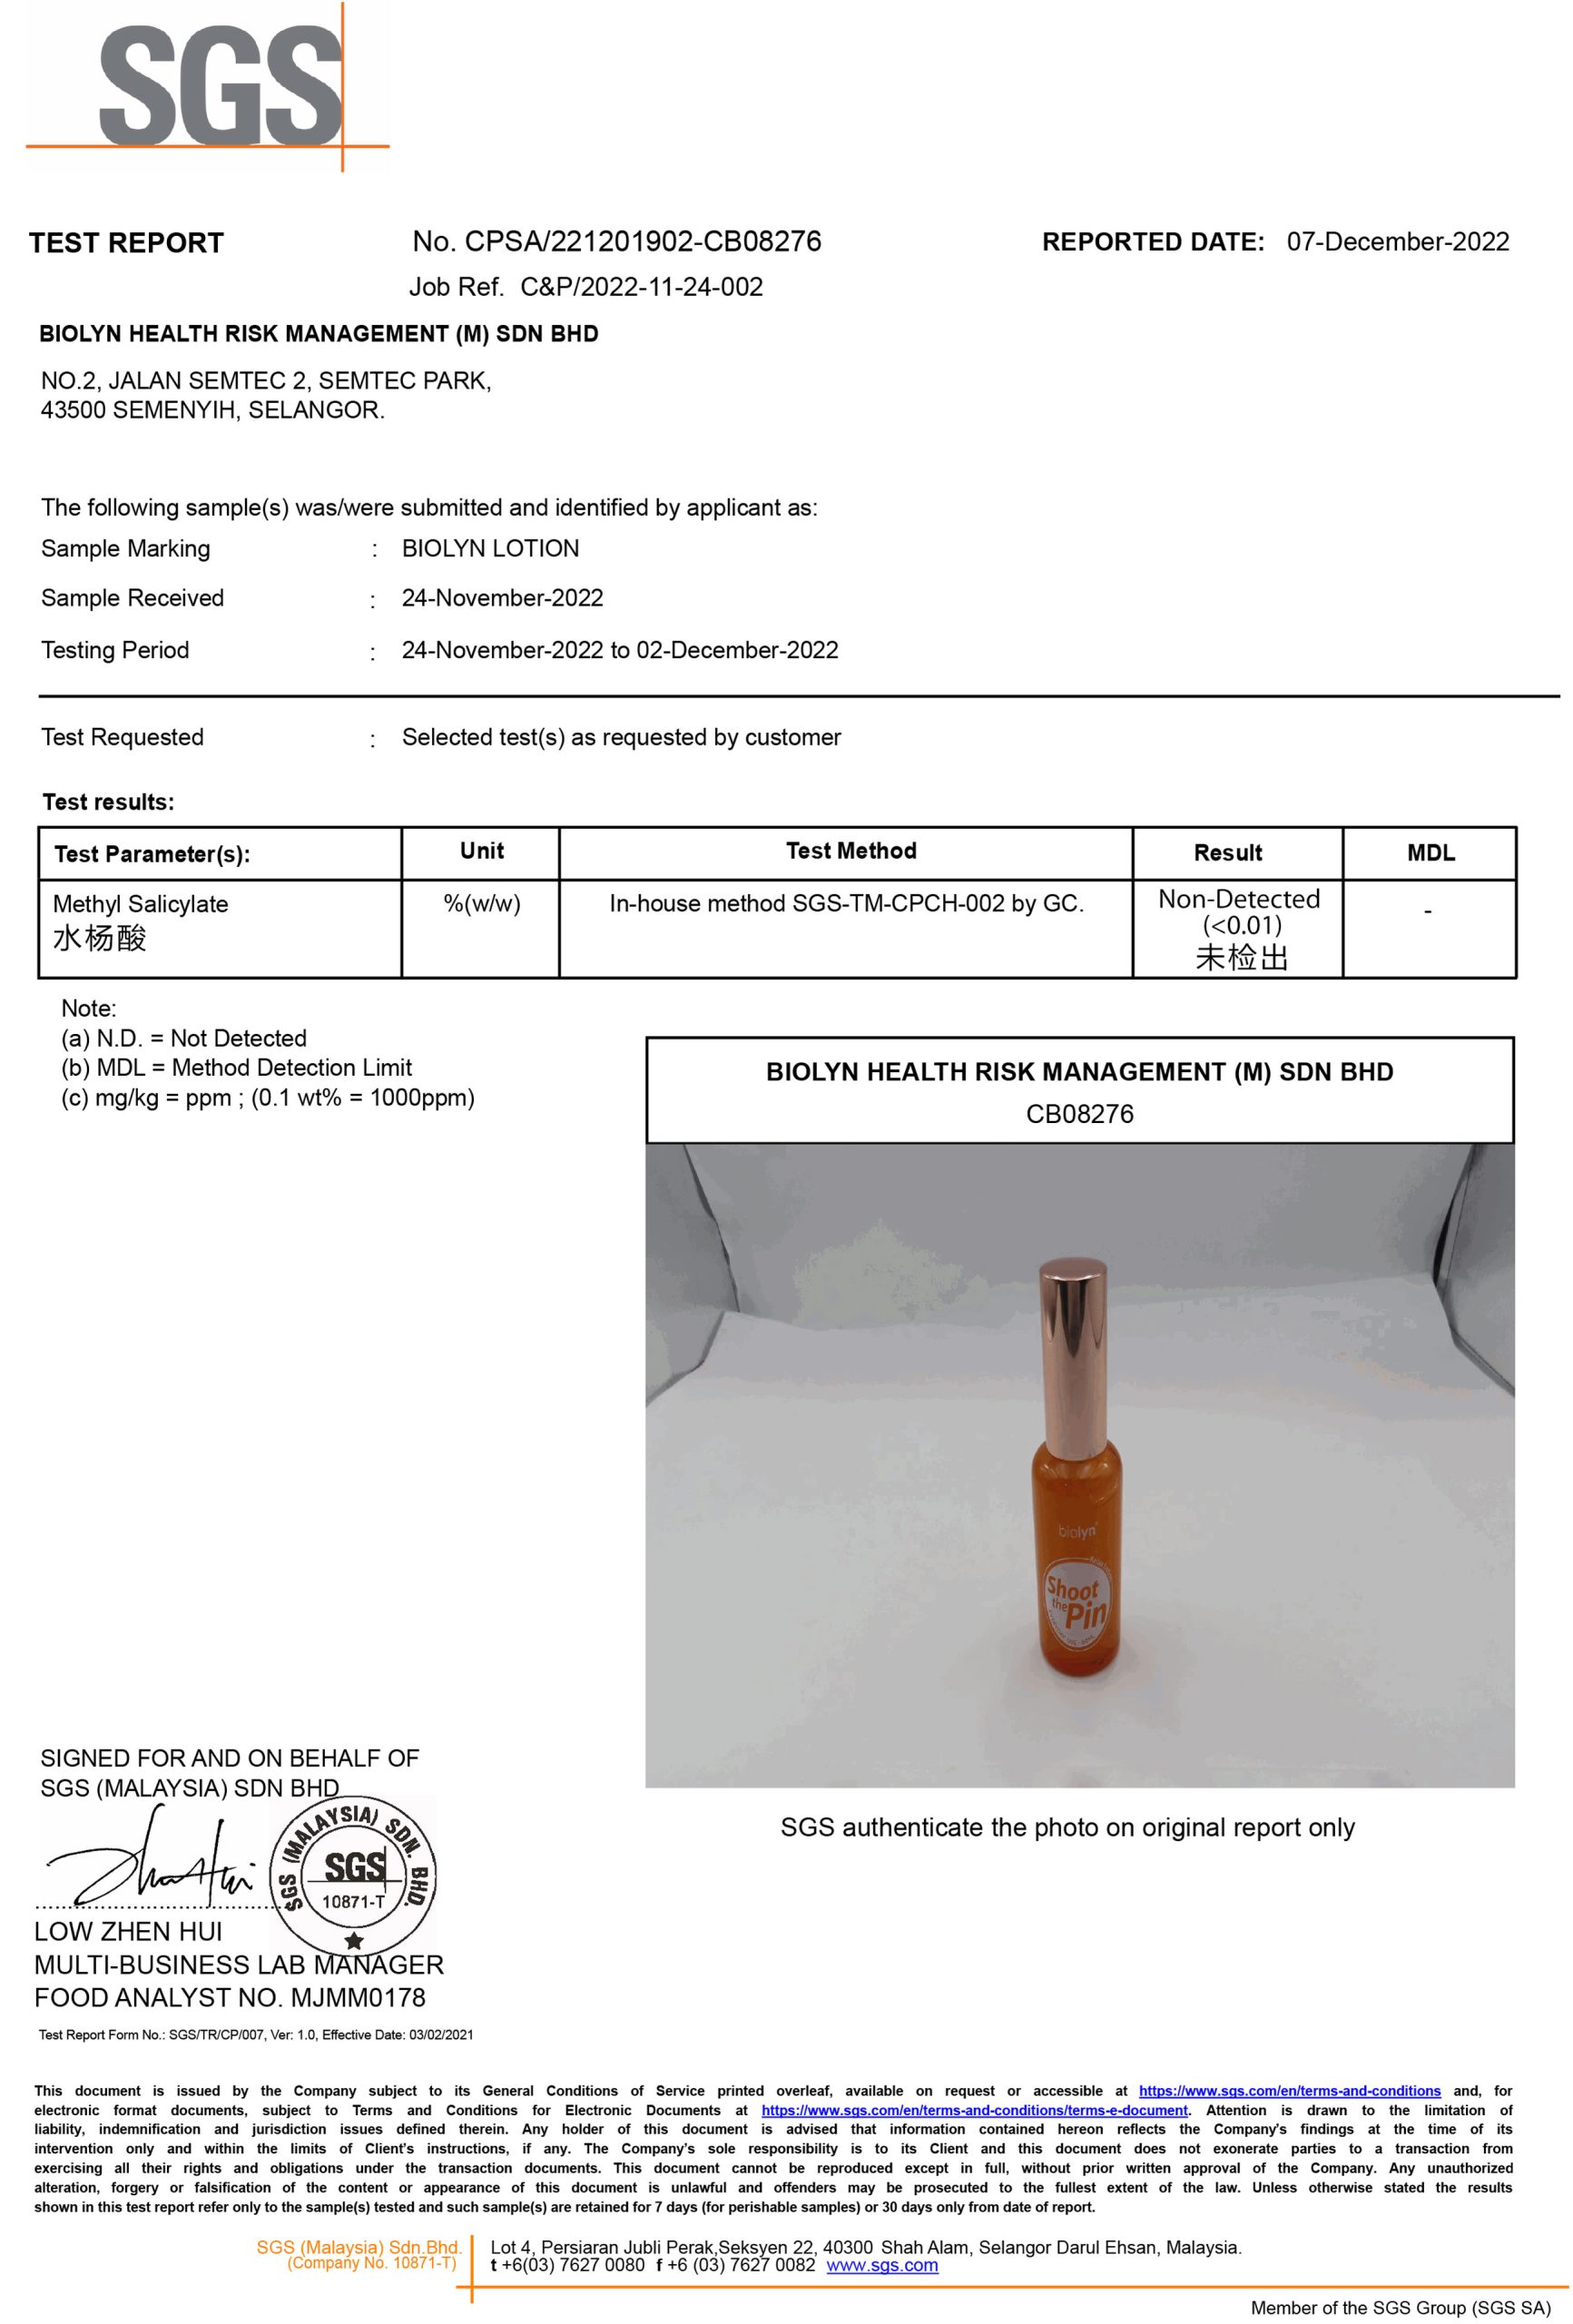 methyl-salicate-report-1_E